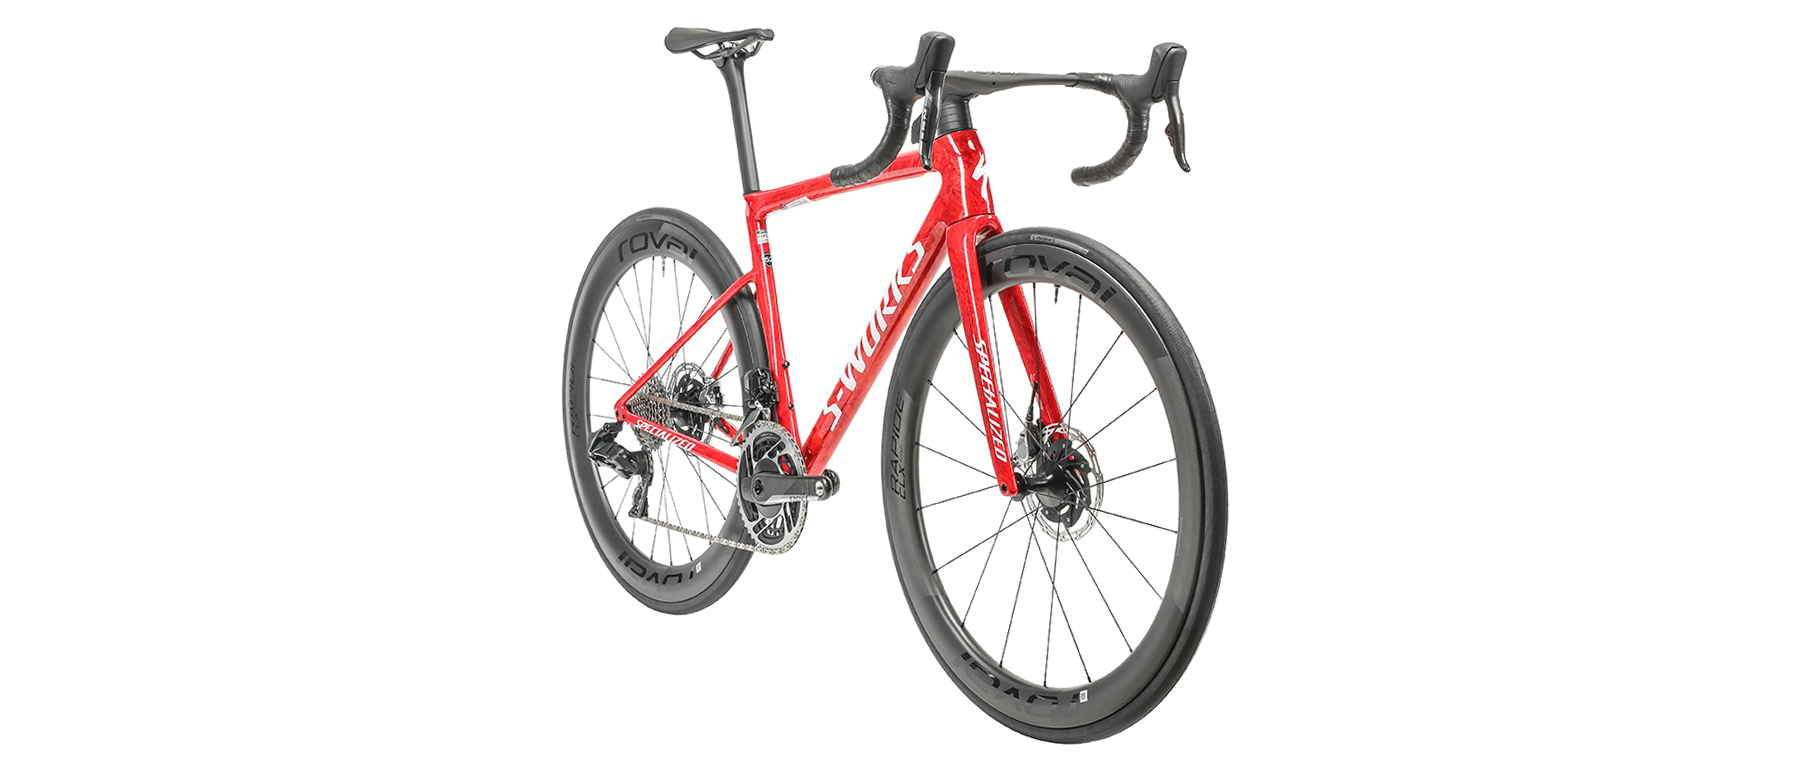 Specialized S-Works Tarmac SL8 Red eTap AXS Bicycle